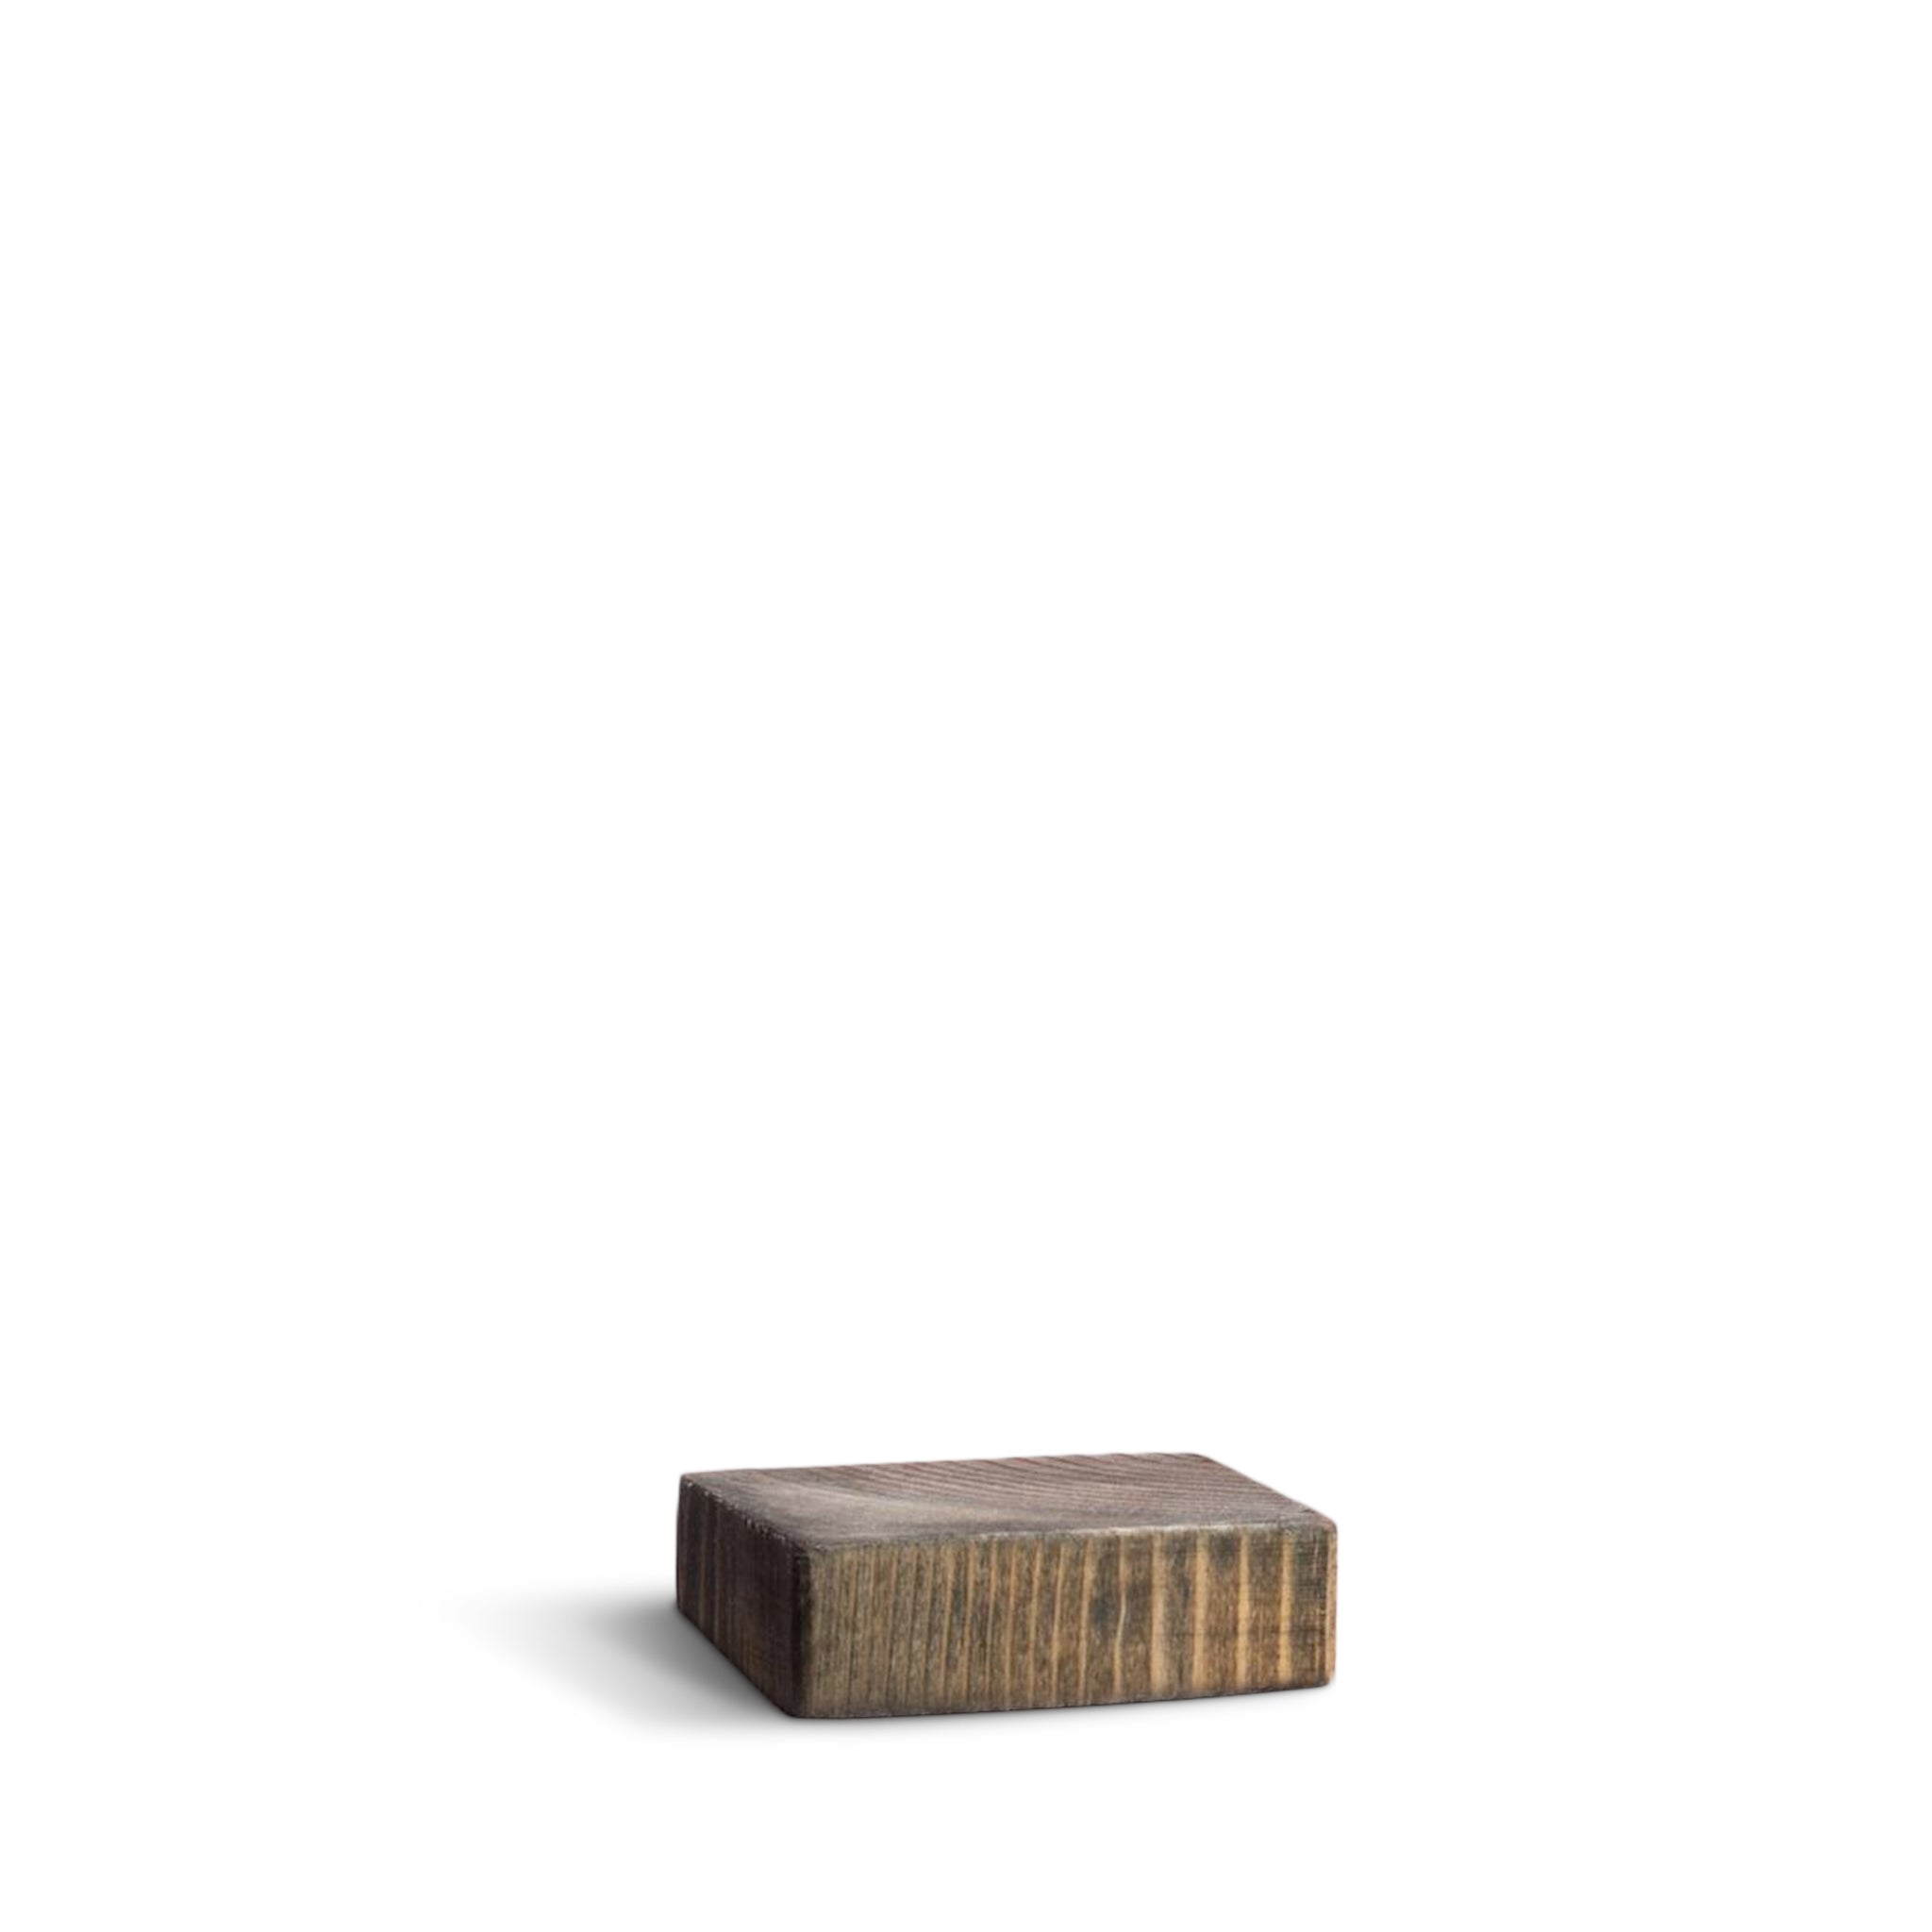 3.5x1.5 Ebony Wood Block